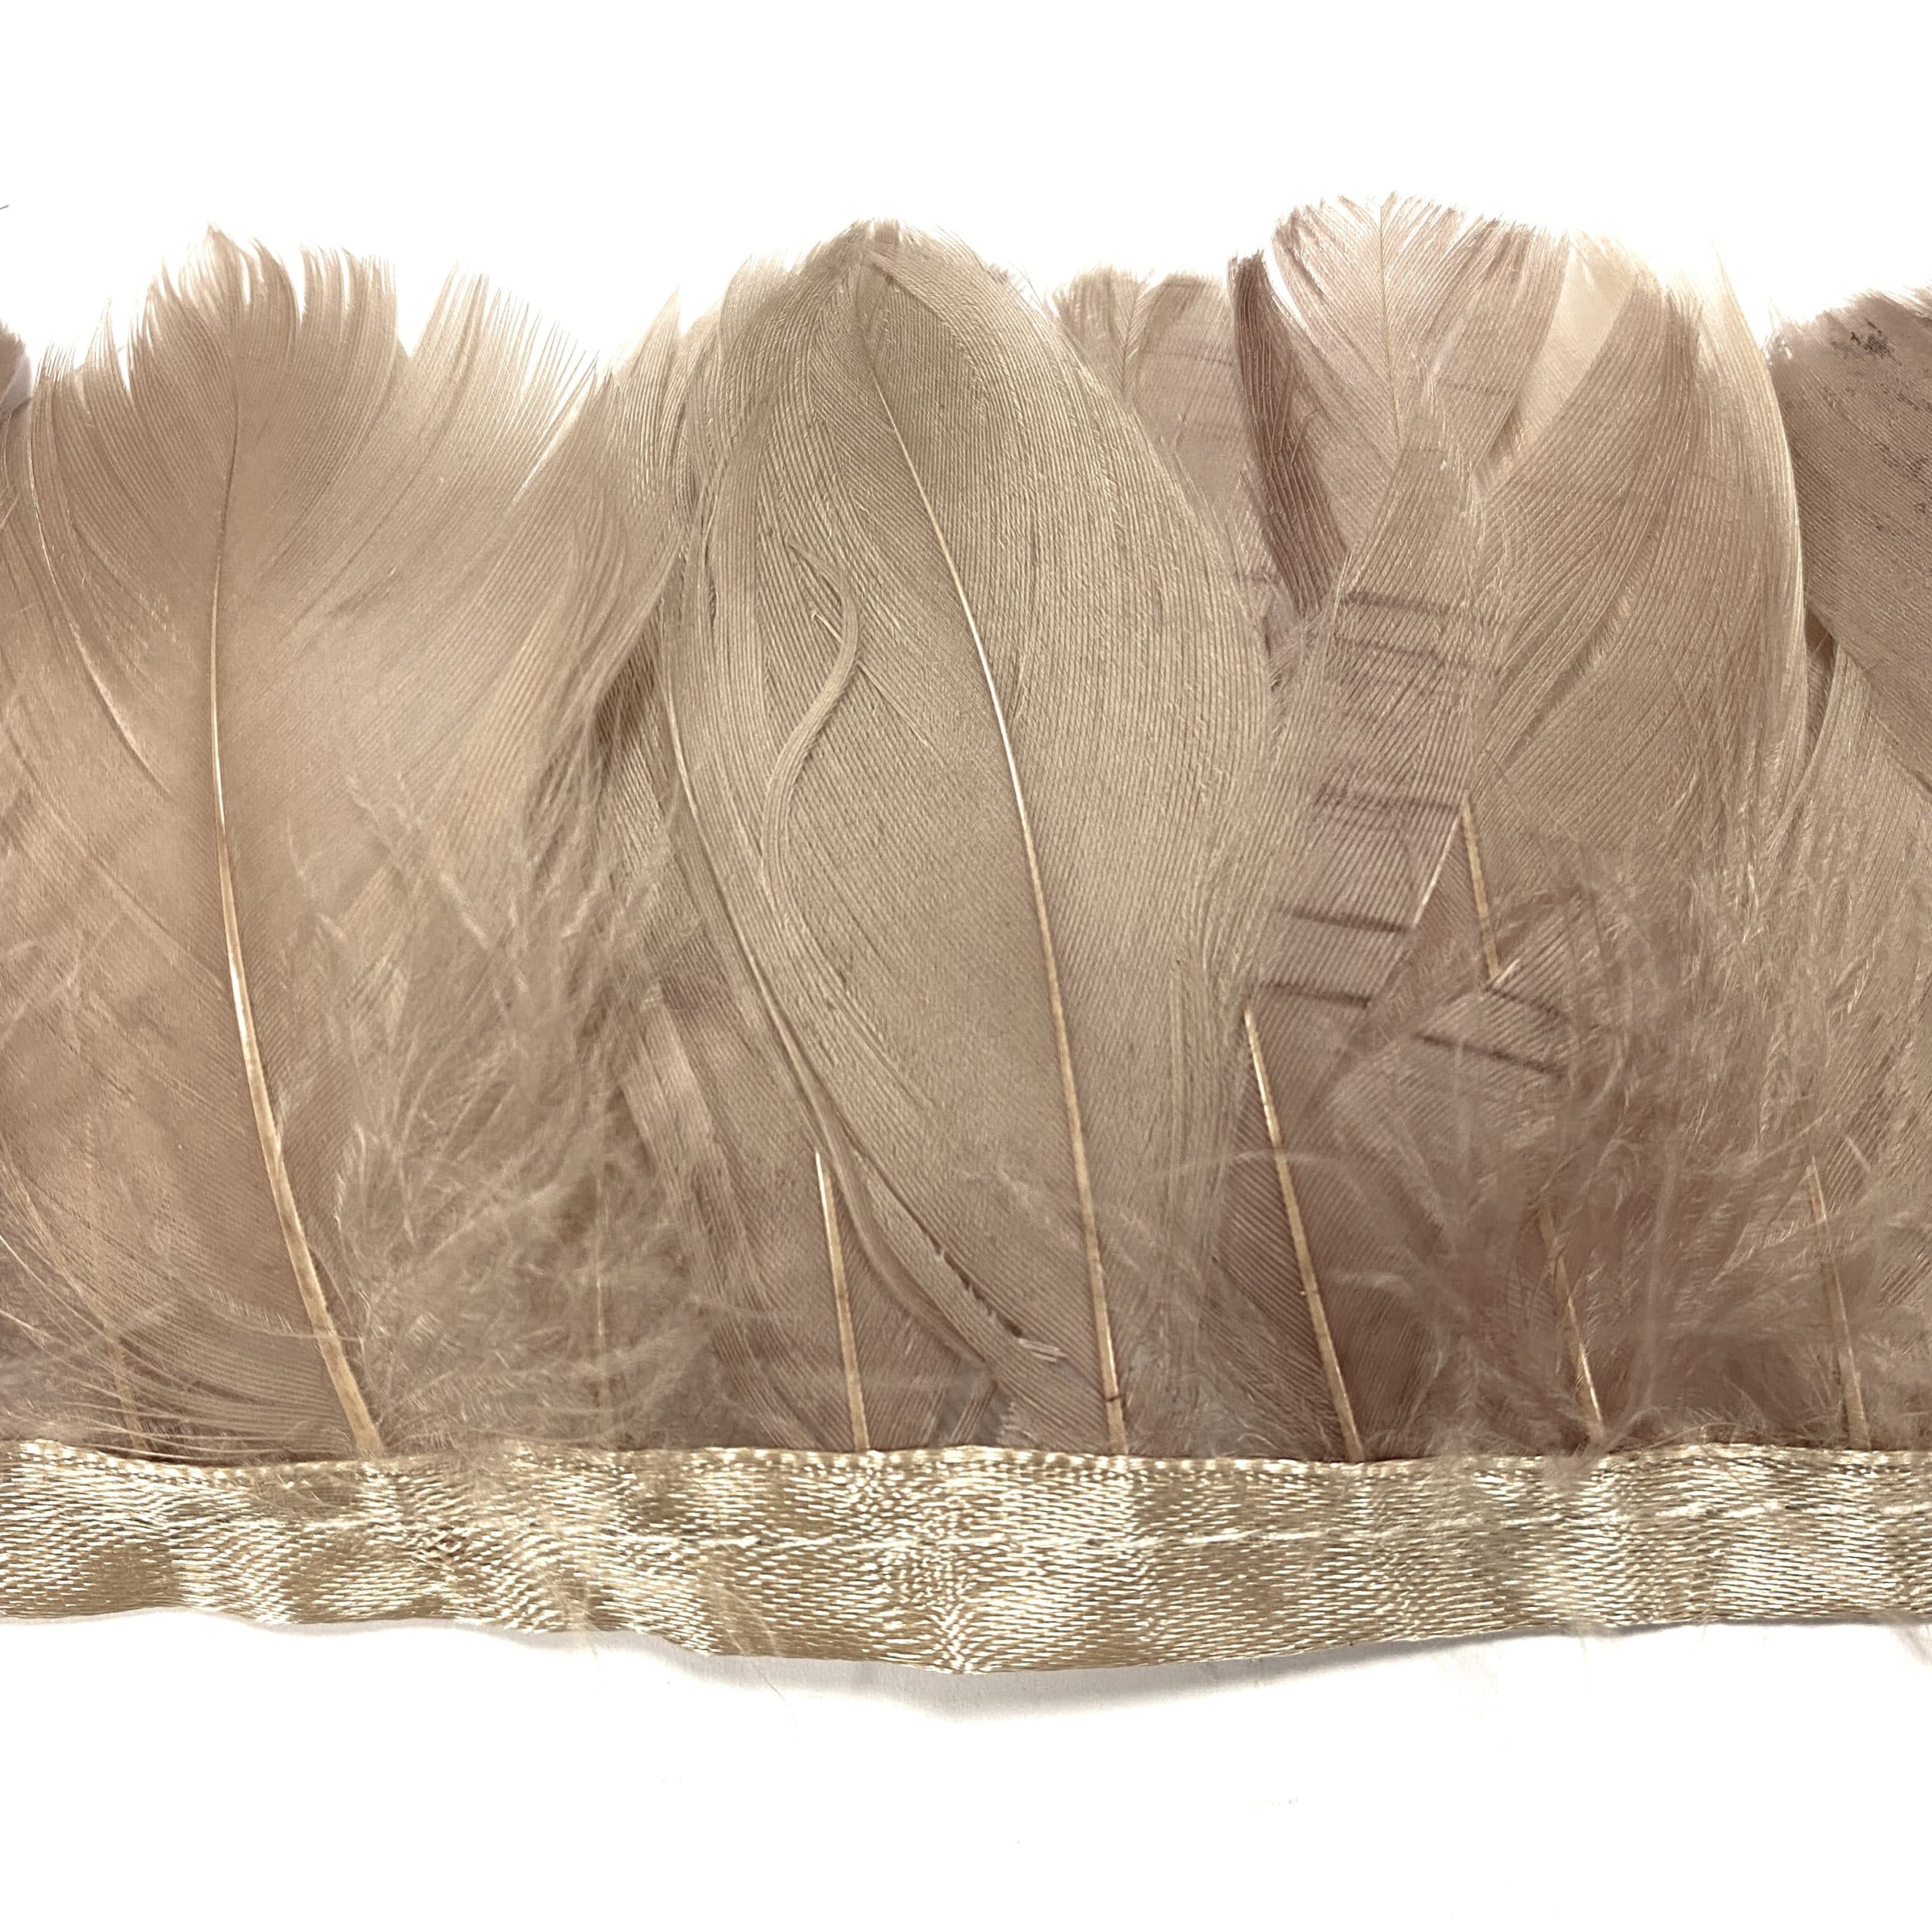 Indígena frecuentemente Solicitante Tira de plumas de oca metreadas | Vindastore.com